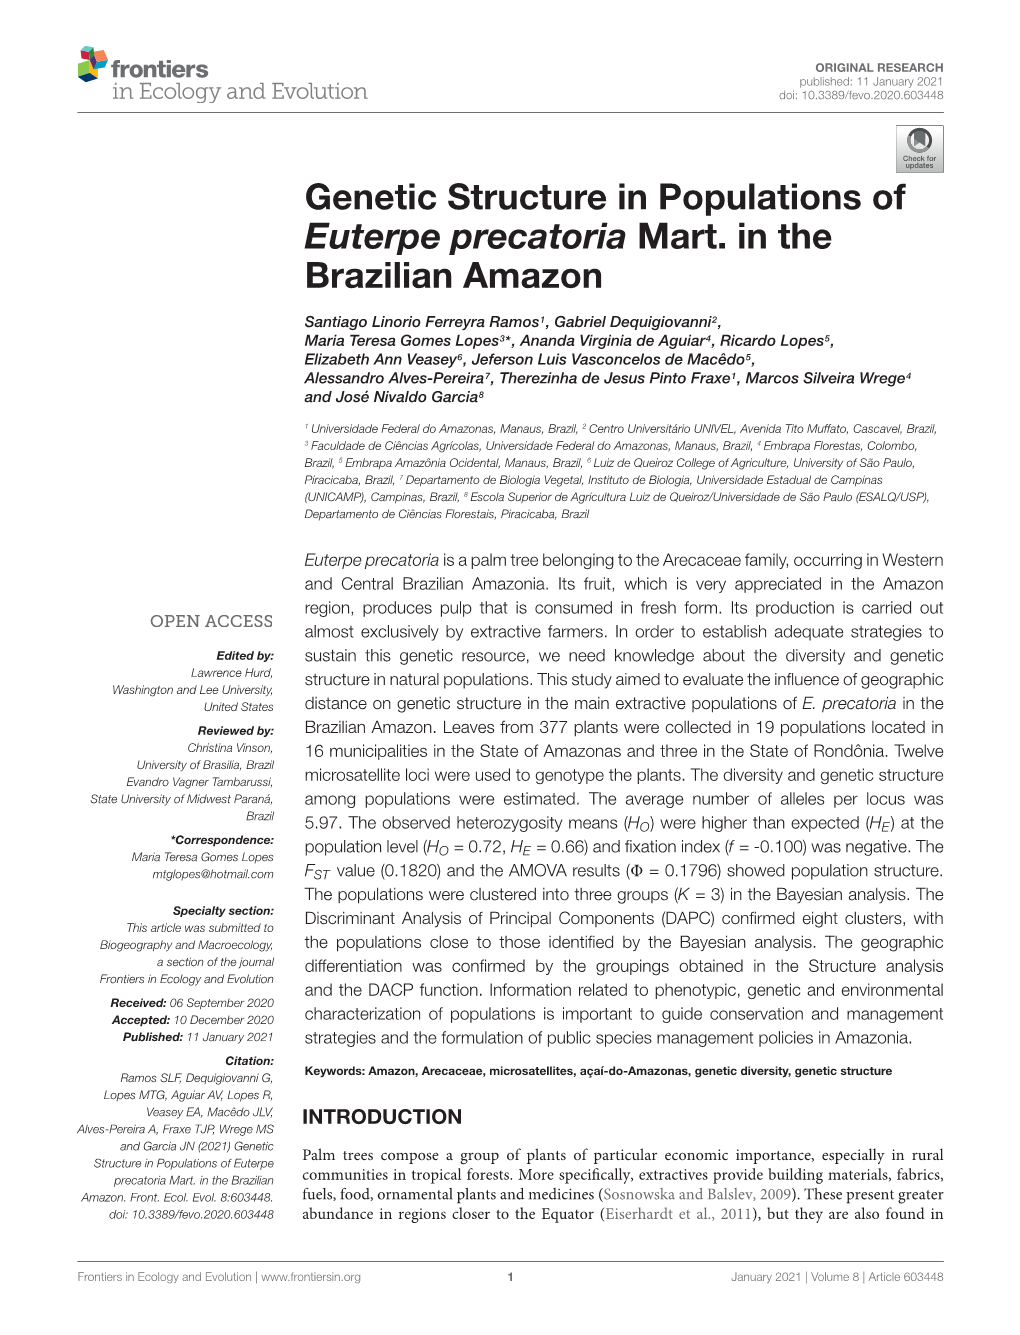 Genetic Structure in Populations of Euterpe Precatoria Mart. in the Brazilian Amazon